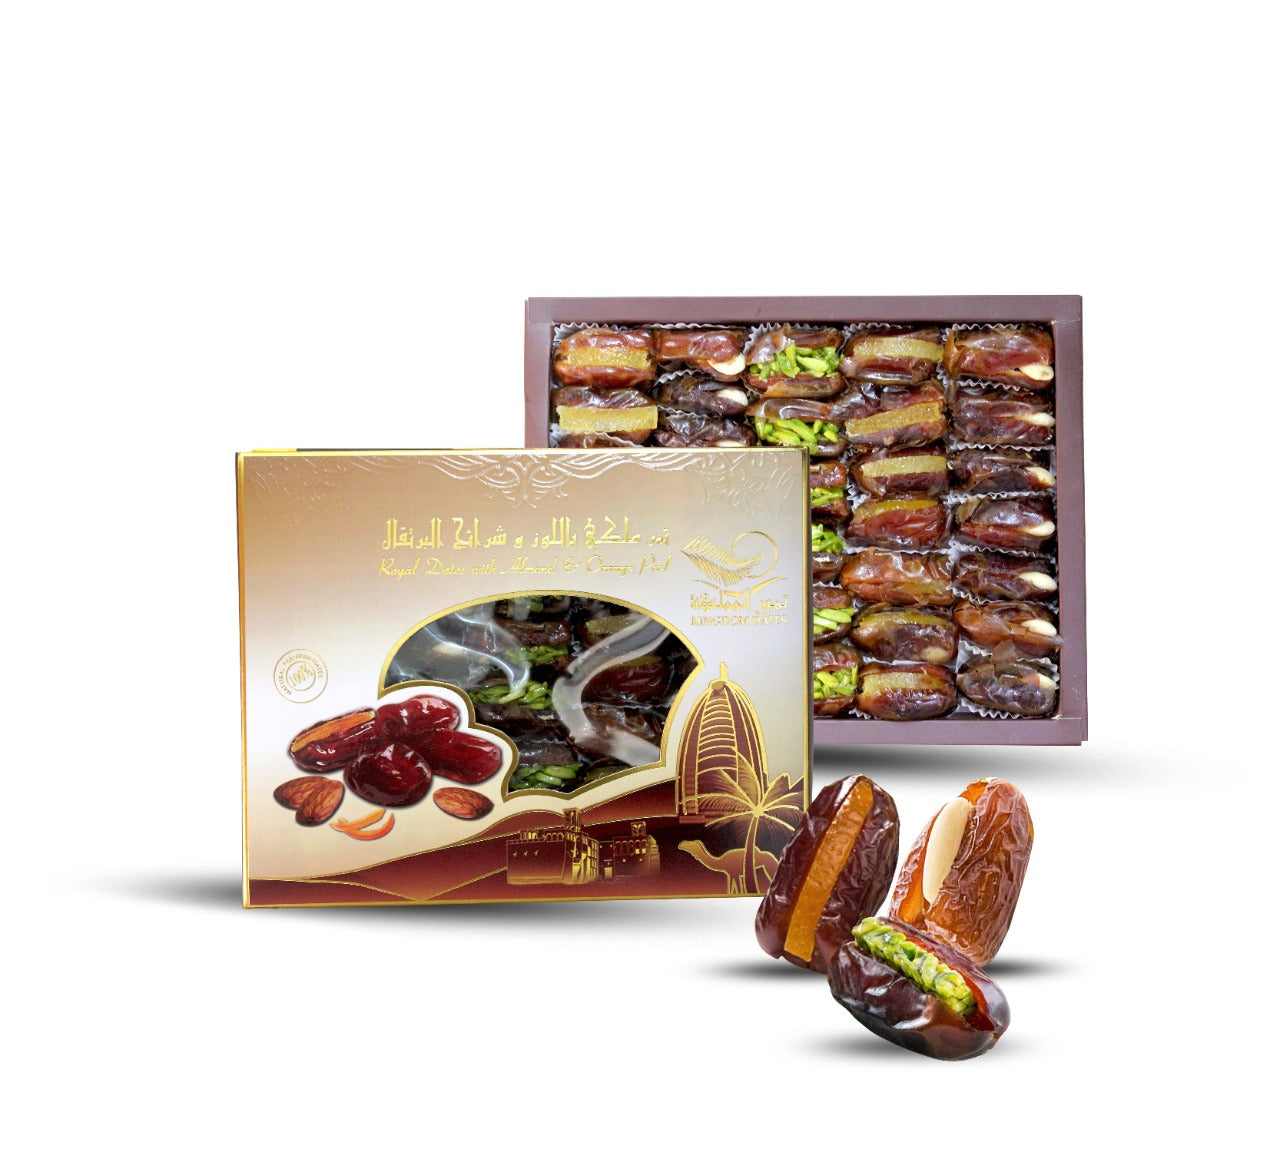 Dates with Almond, orange peel and pistachio 400g - kingdom Dates UAE